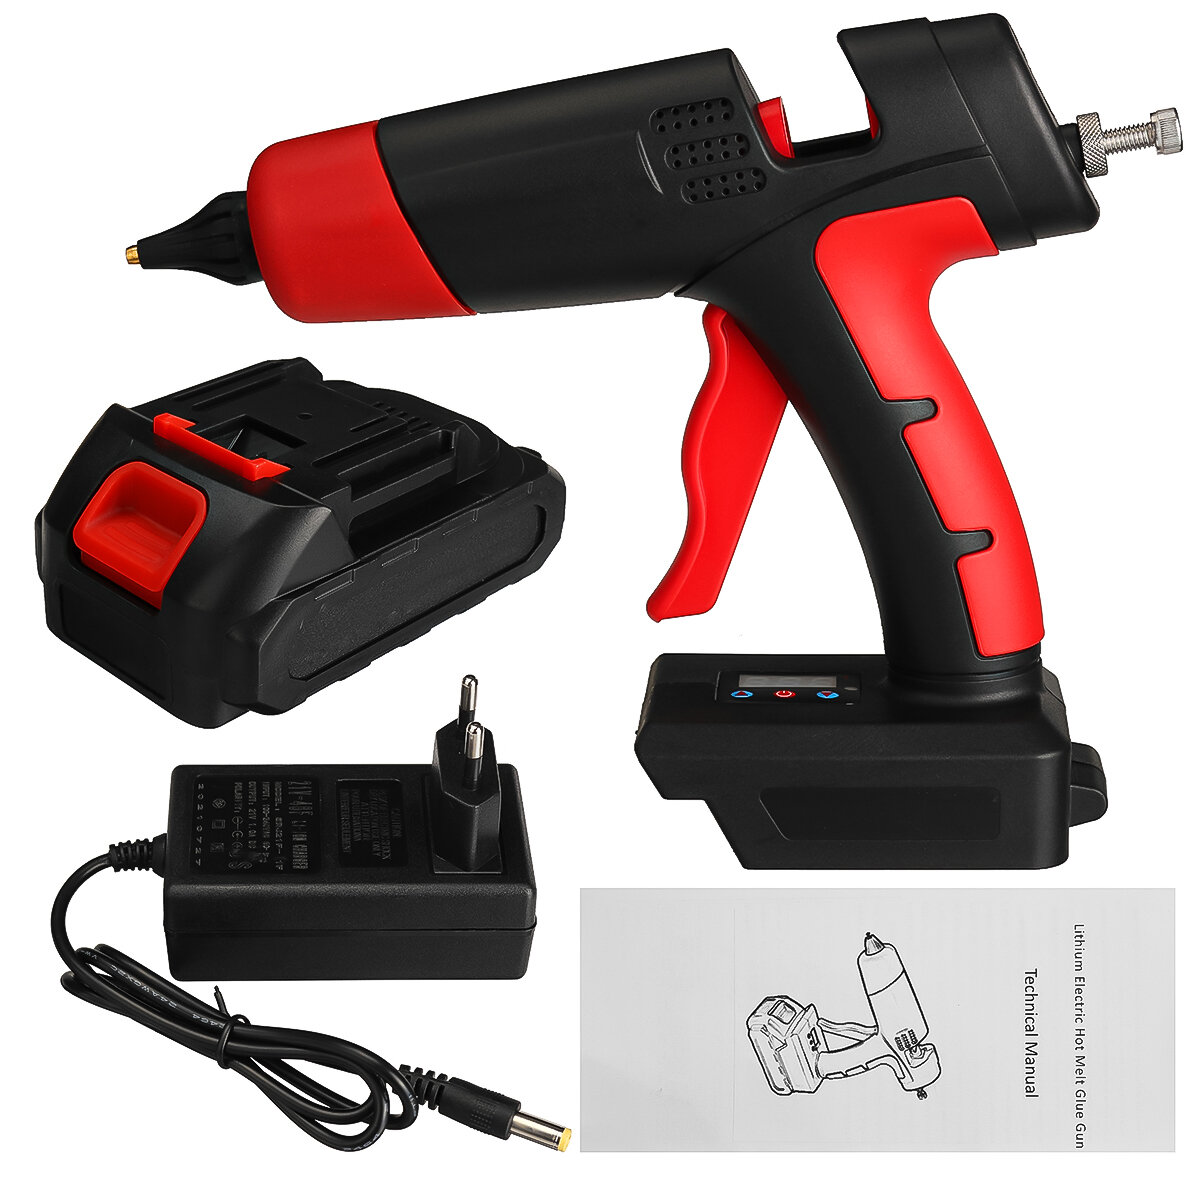 VIOLEWORKS Hot Melt Glue Guns Cordless Rechargeable Hot Glue Applicator Home Improvement Craft DIY Tool For Makita18V Battery COD